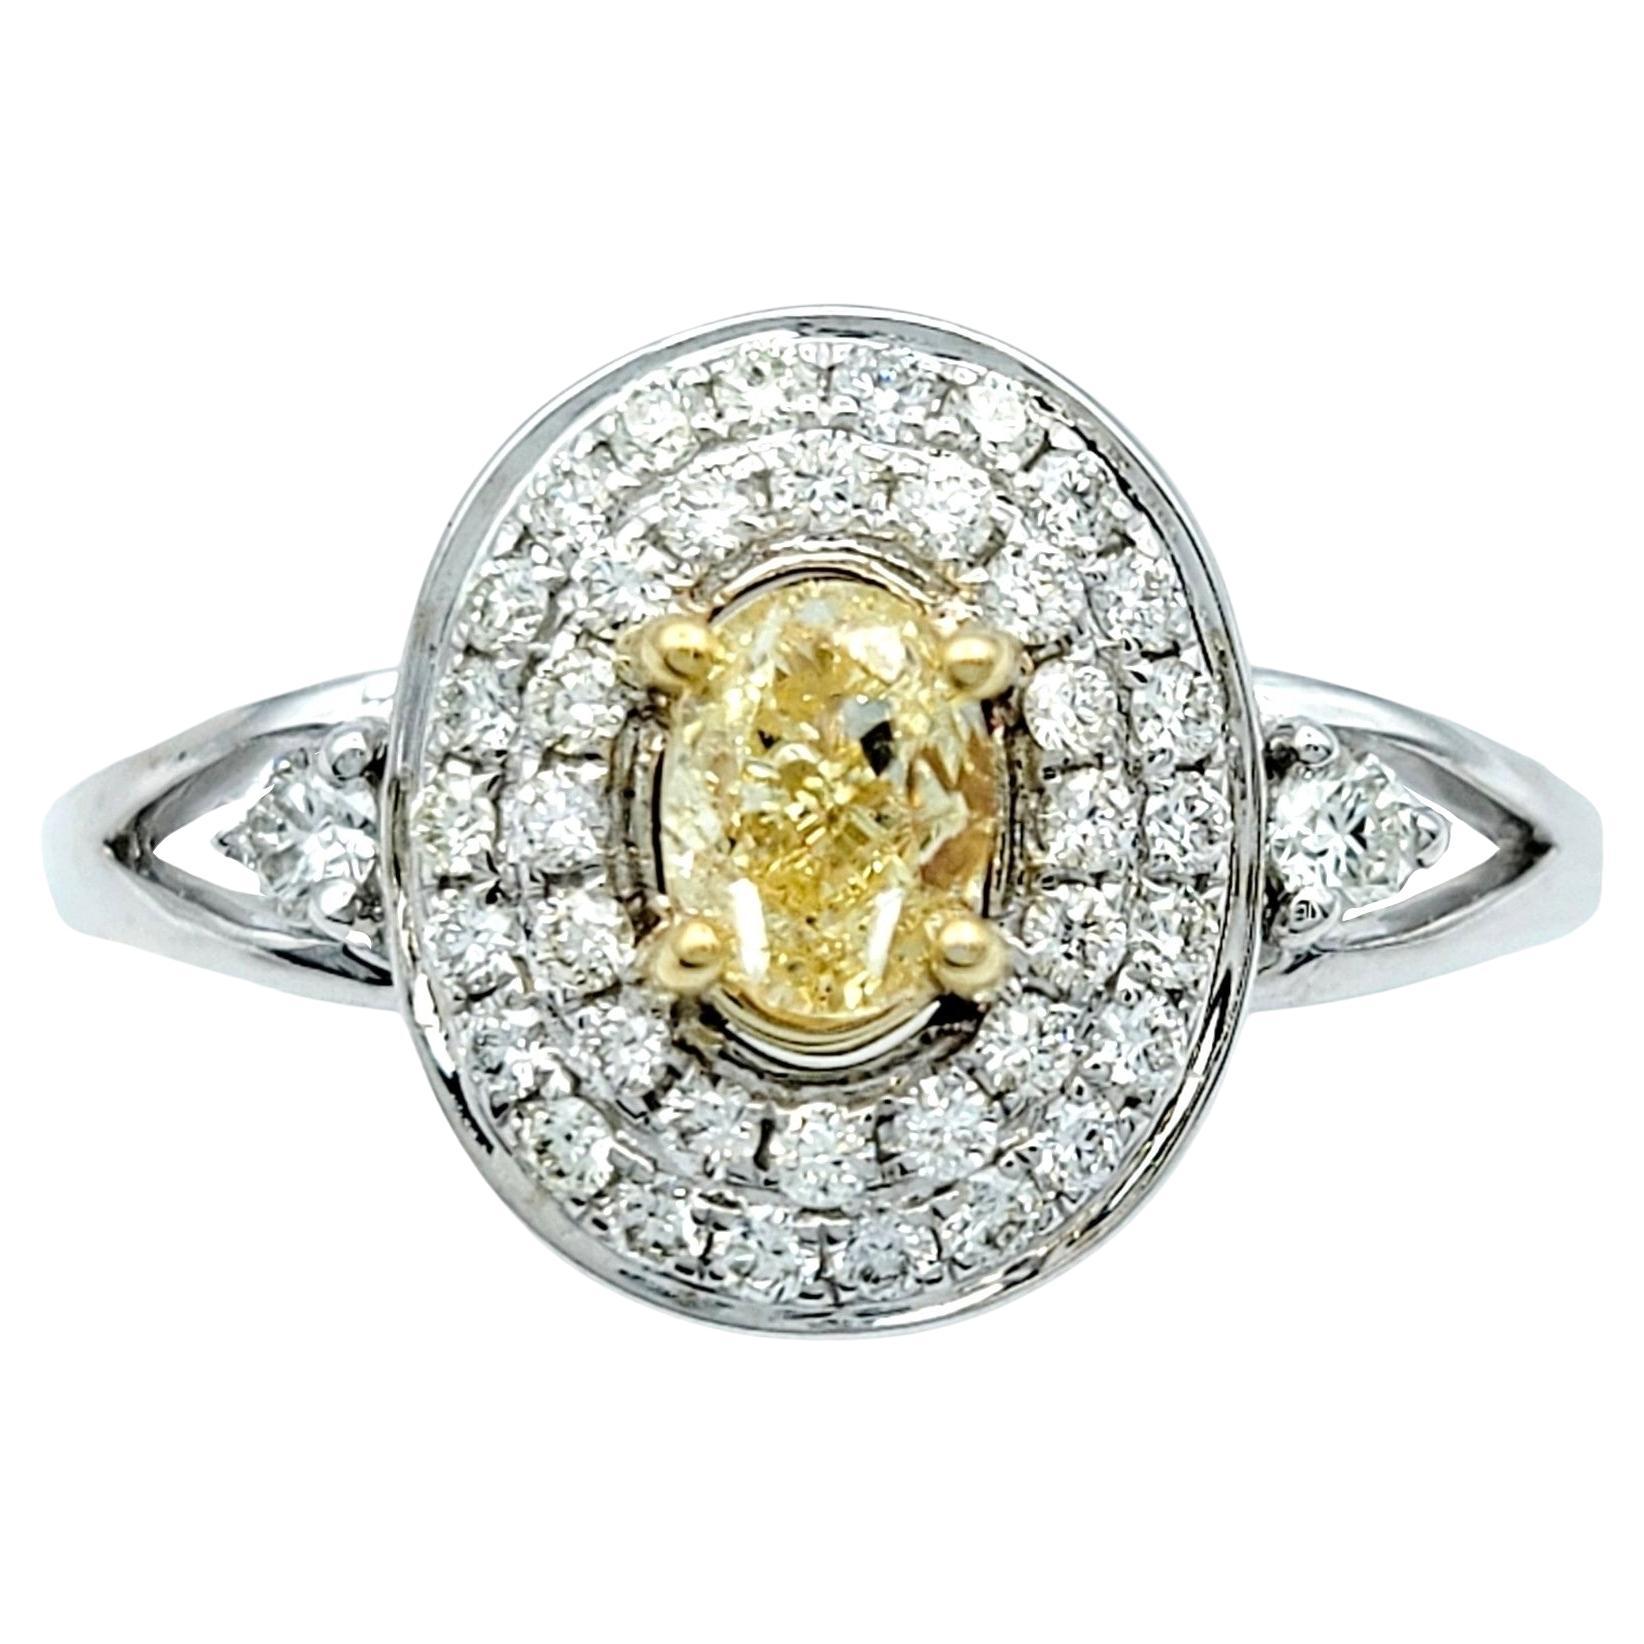 Oval Fancy Yellow Diamond with White Diamond Double Halo Set in White Gold